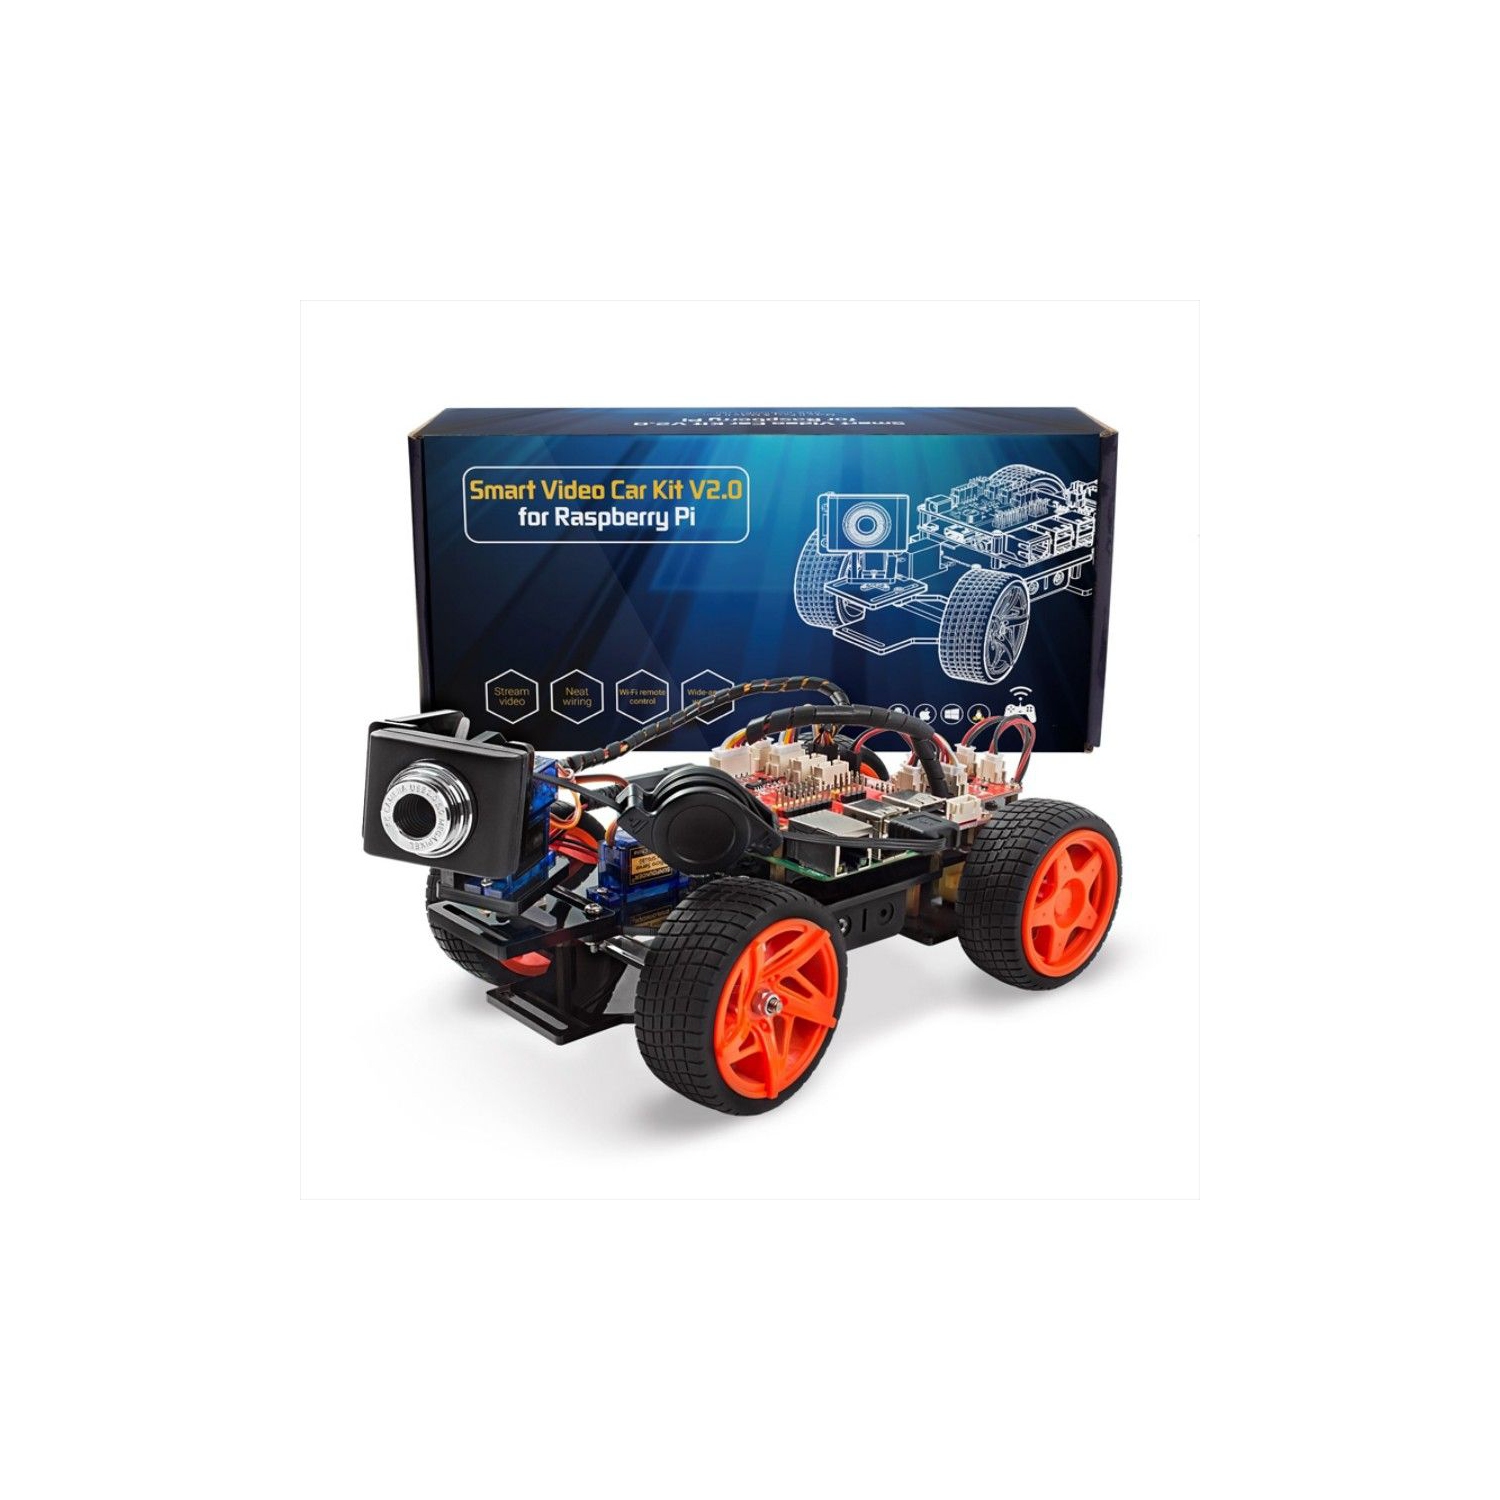 SunFounder Smart Video Car Kit Educational Toy Car, V.20 PiCar-V Robot Kit Raspberry Pi 4, Graphical Visual Programming Language, Video Transmission Remote Control by UI on Windows, Mac, Web Browser